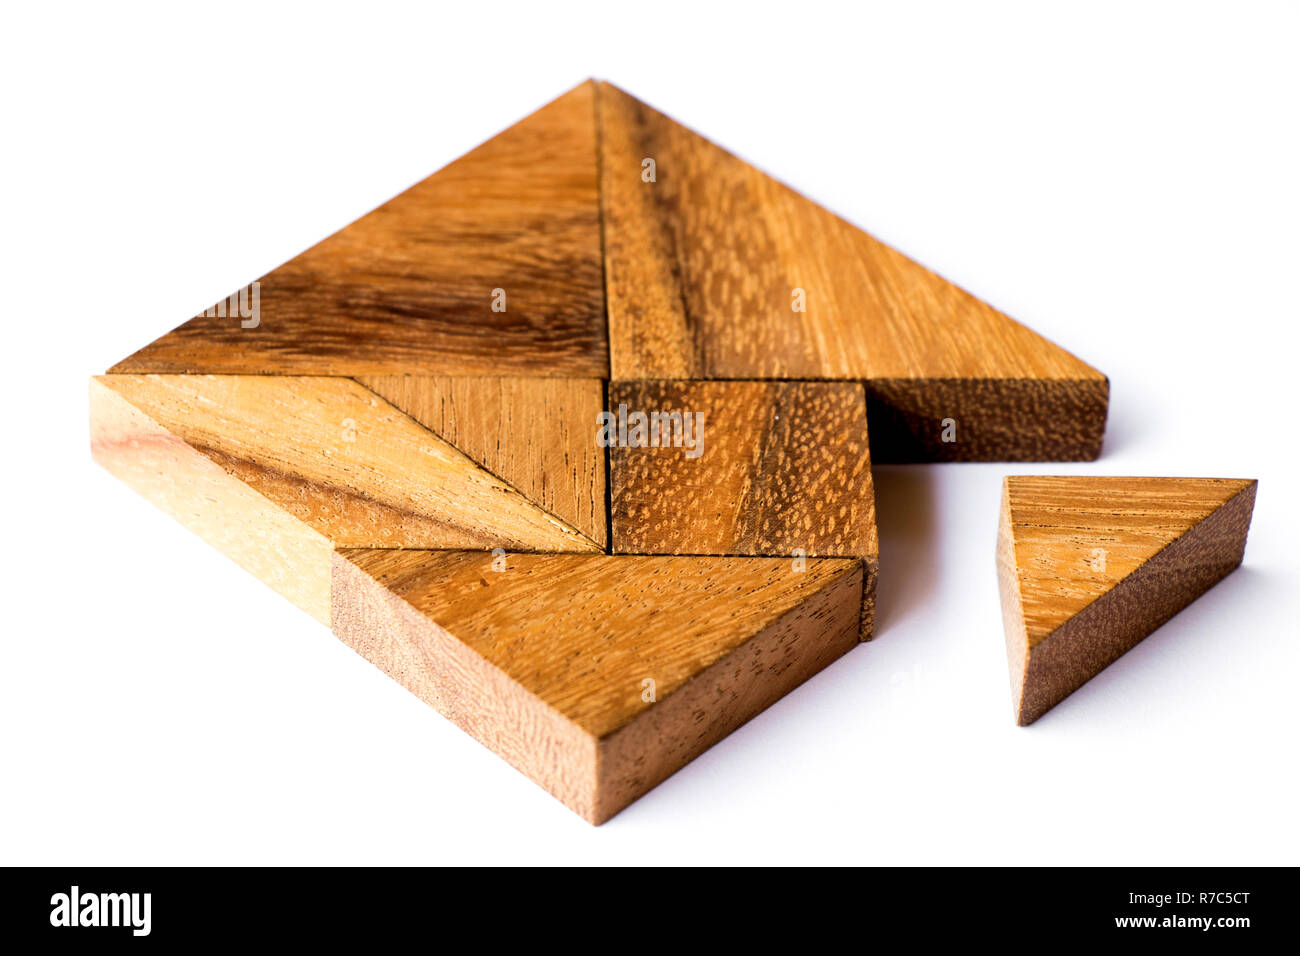 Tangram madera en forma cuadrada que esperar pieza triangular para cumplir  sobre fondo blanco Fotografía de stock - Alamy